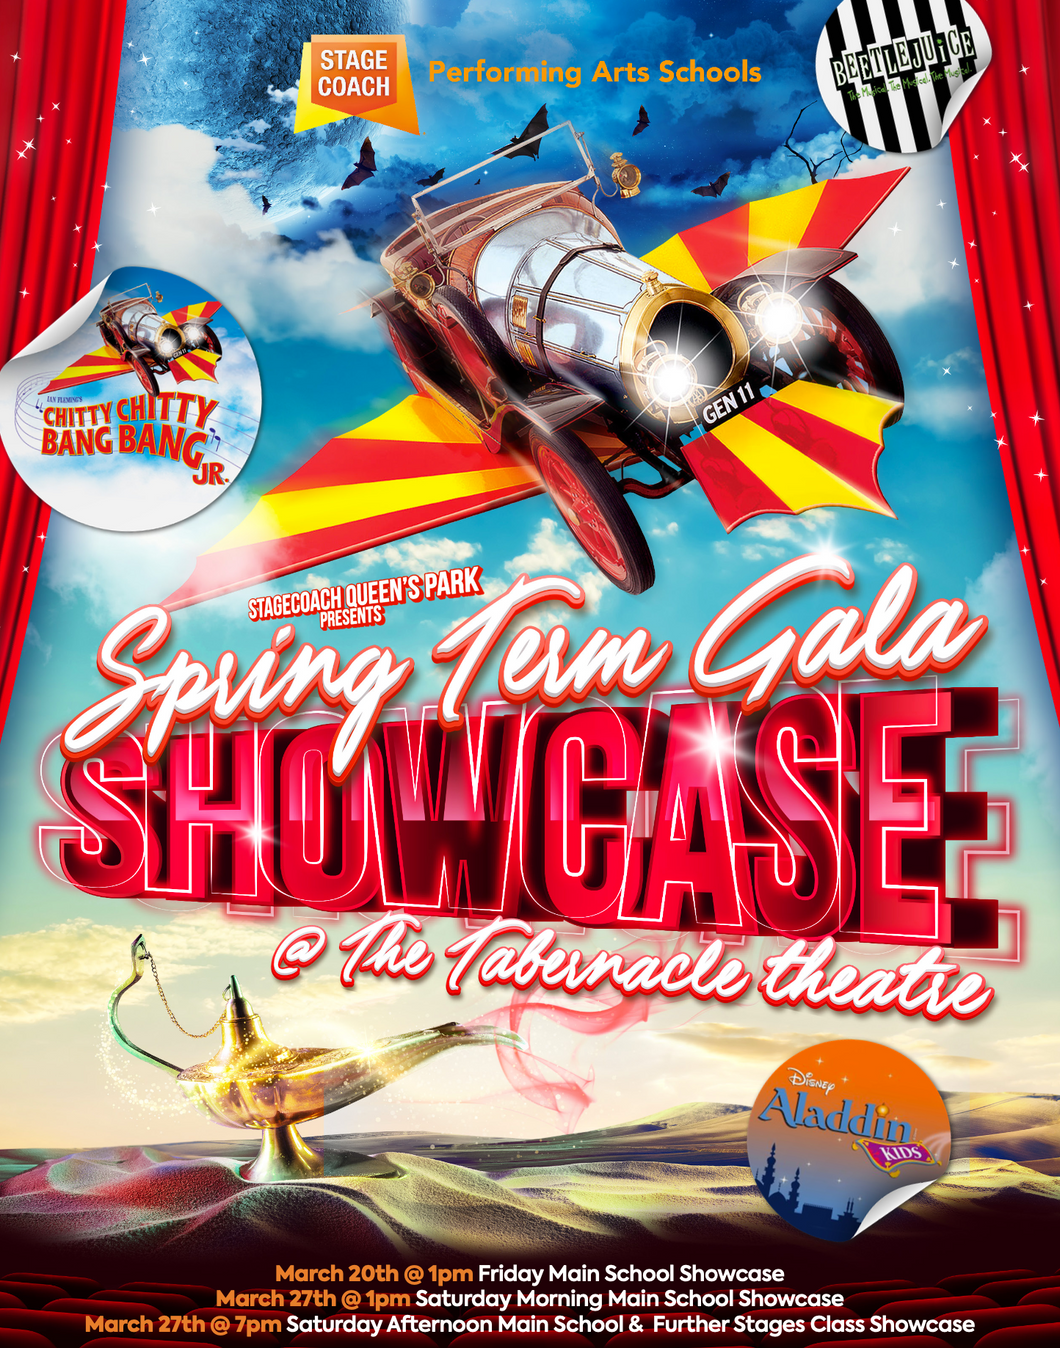 DVD of Spring Term Gala Showcase - Queen's Park - Friday School